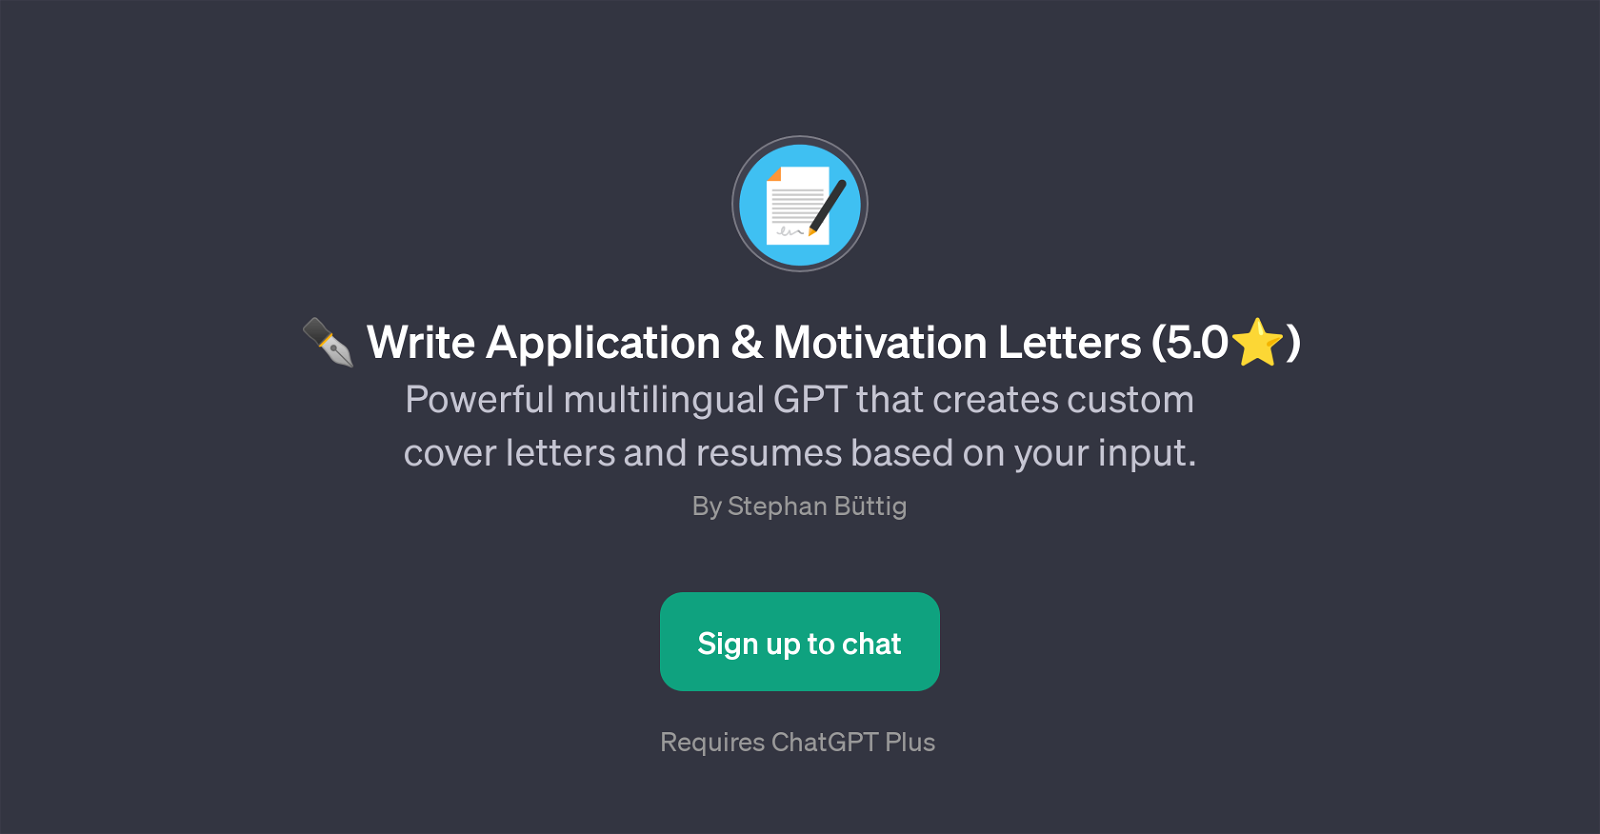 Write Application & Motivation Letters website